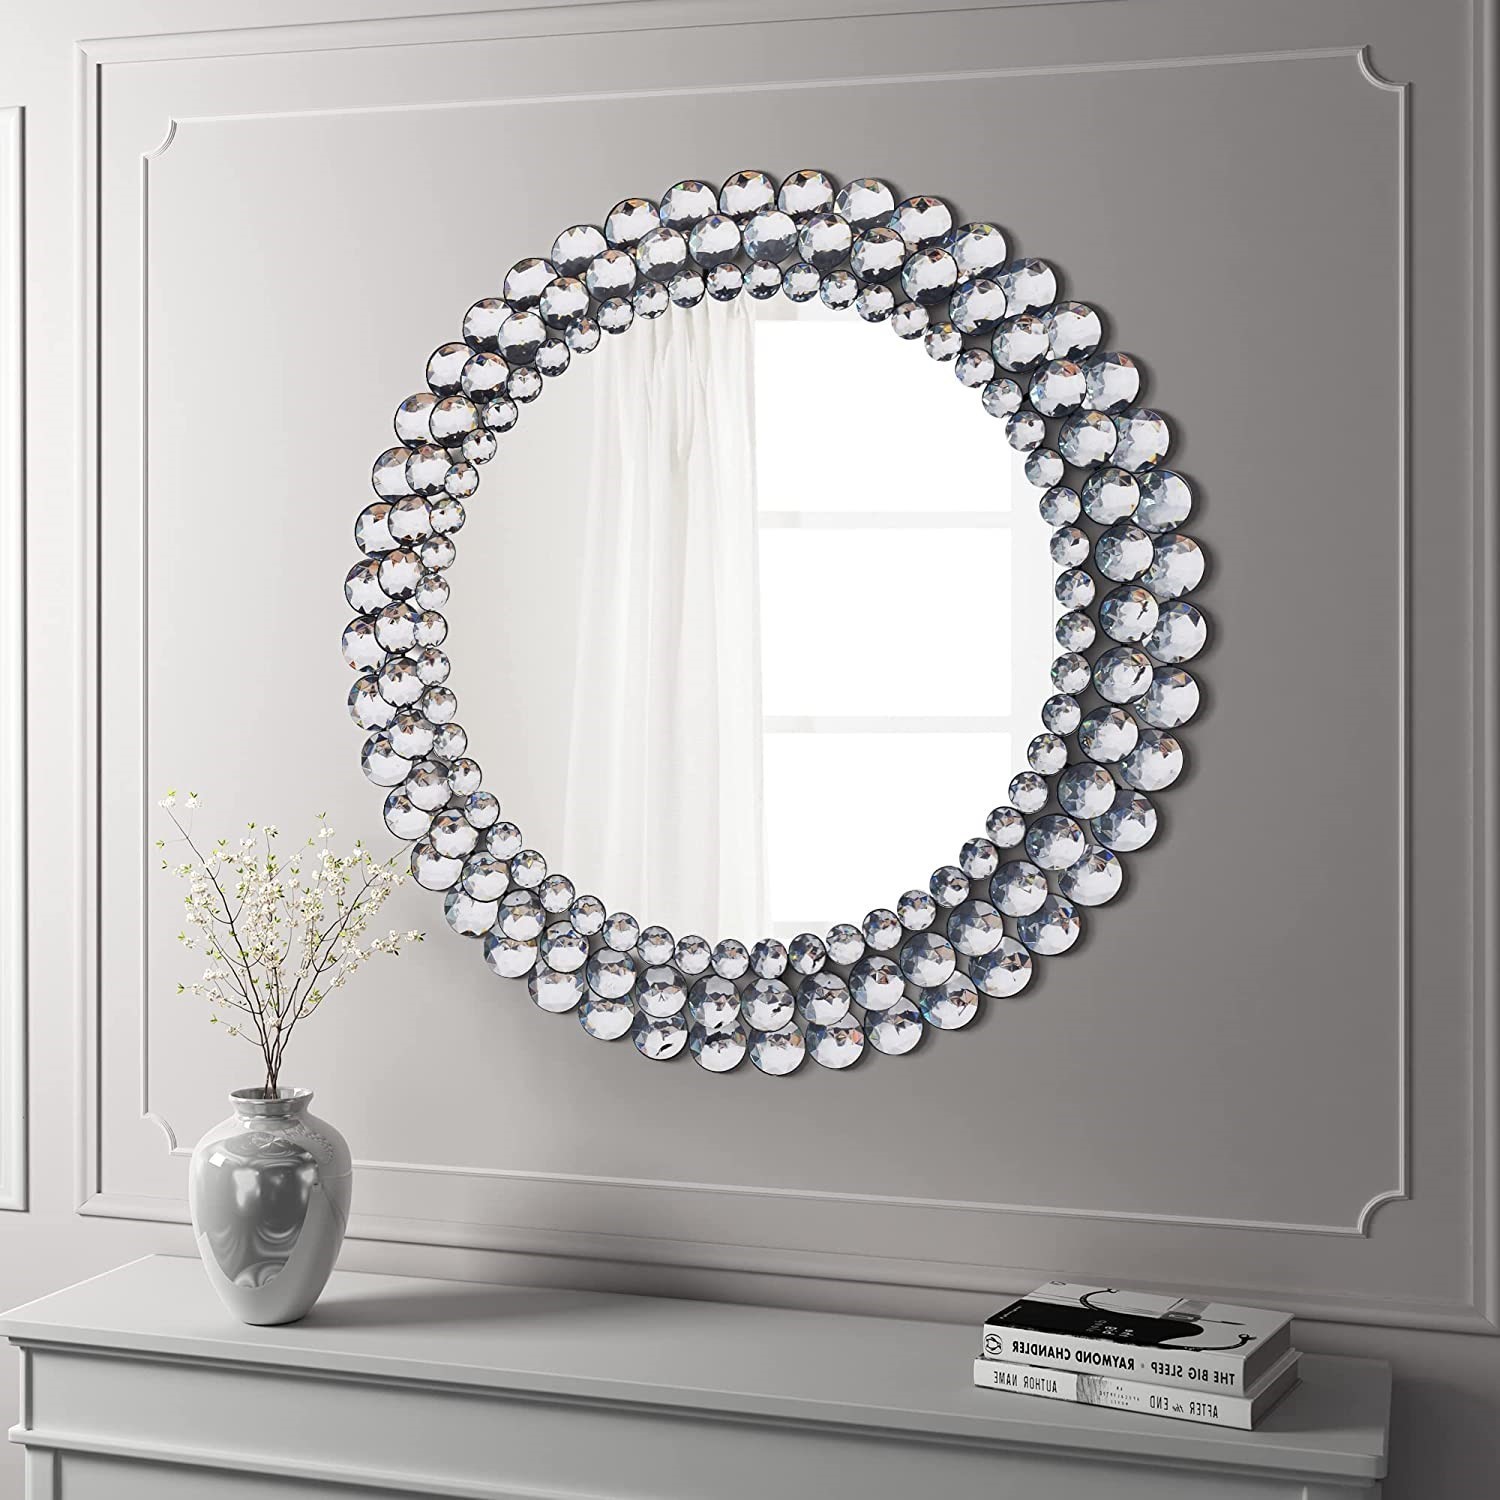 HD-21059 Round glass wall mirror, Living room wall mirror